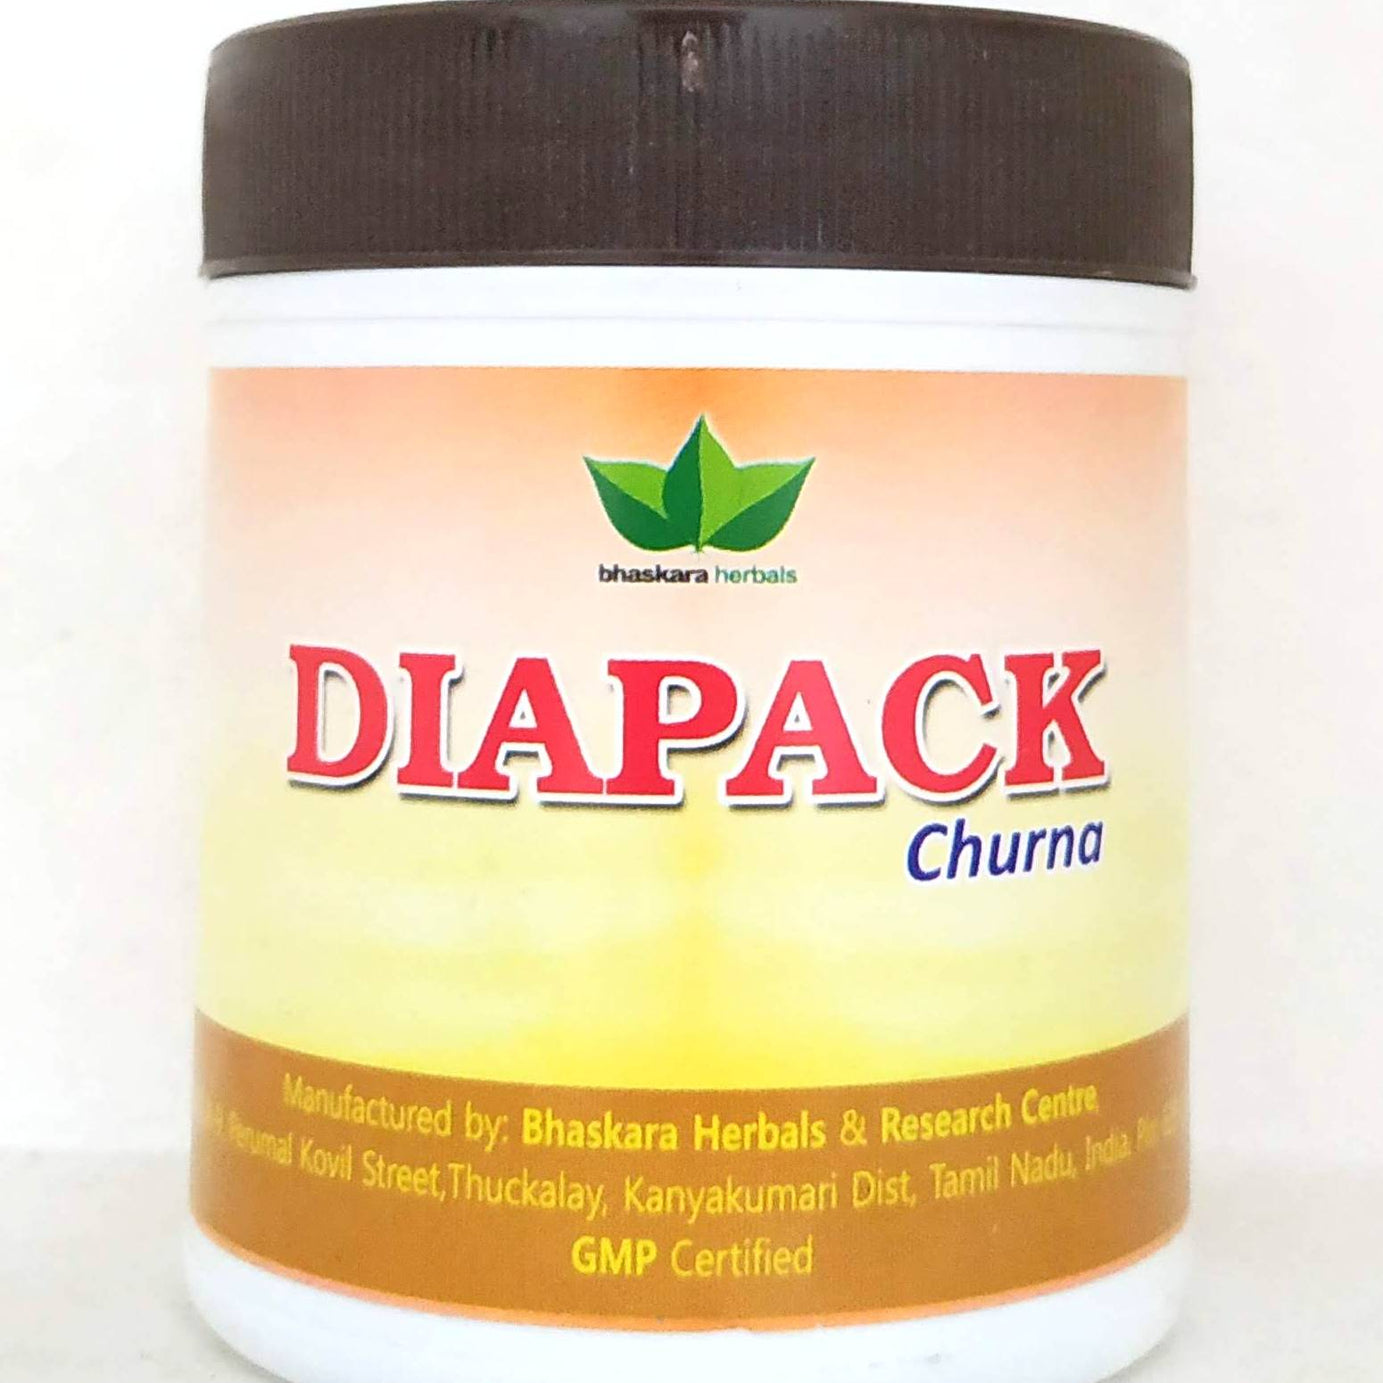 Shop Diapack churna 100gm at price 110.00 from Bhaskara Herbals Online - Ayush Care